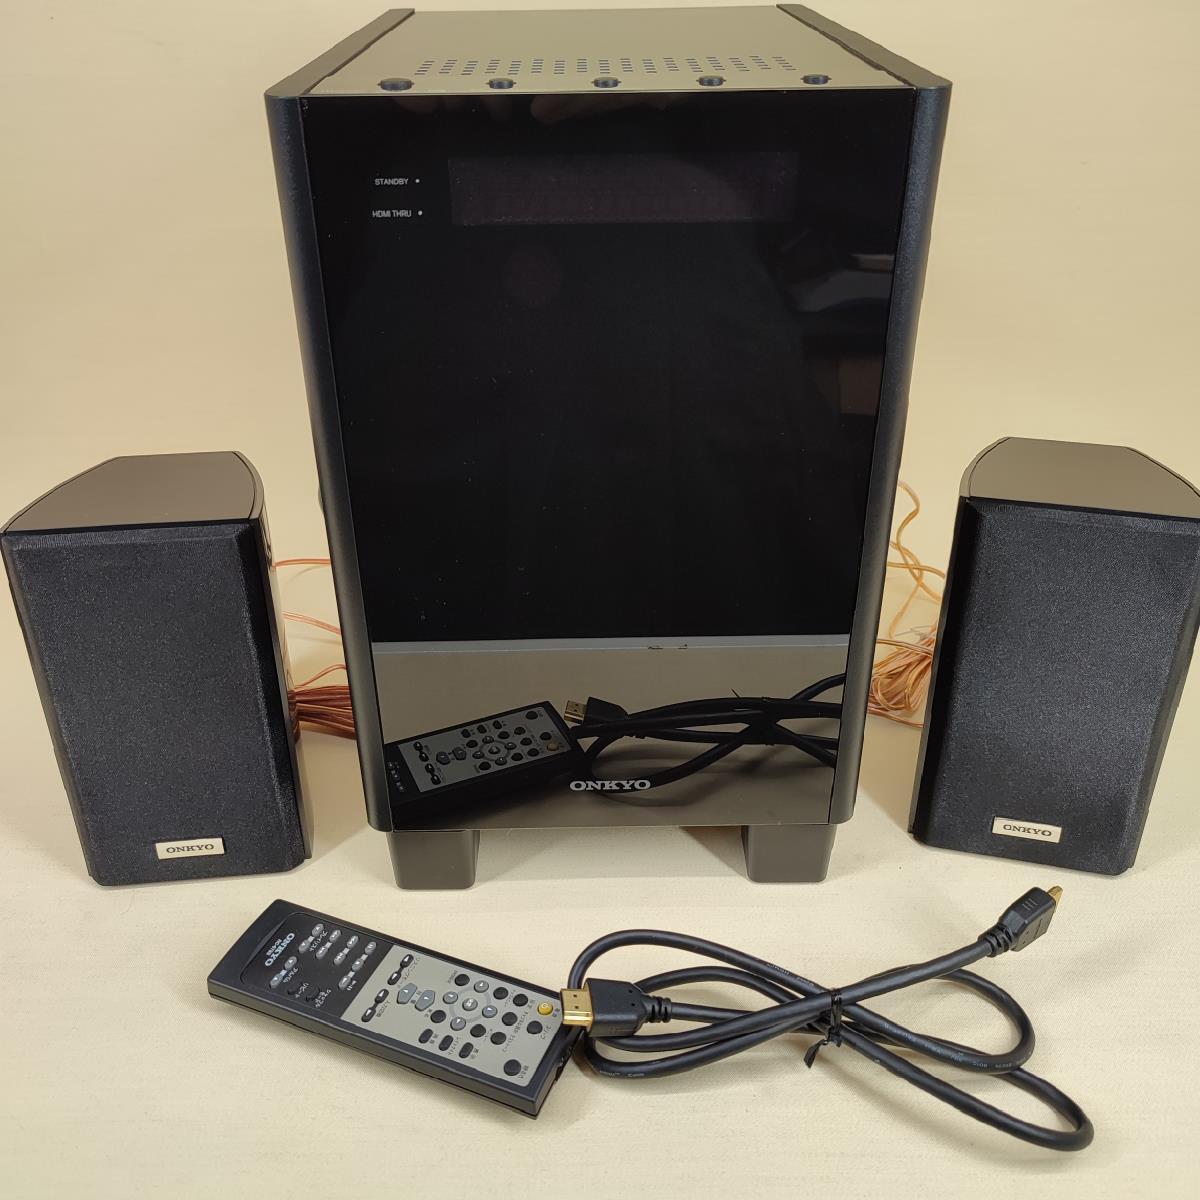 [ operation verification ending ] ONKYO digital Surround system HTX-25HDX PAW speaker remote control Onkyo 